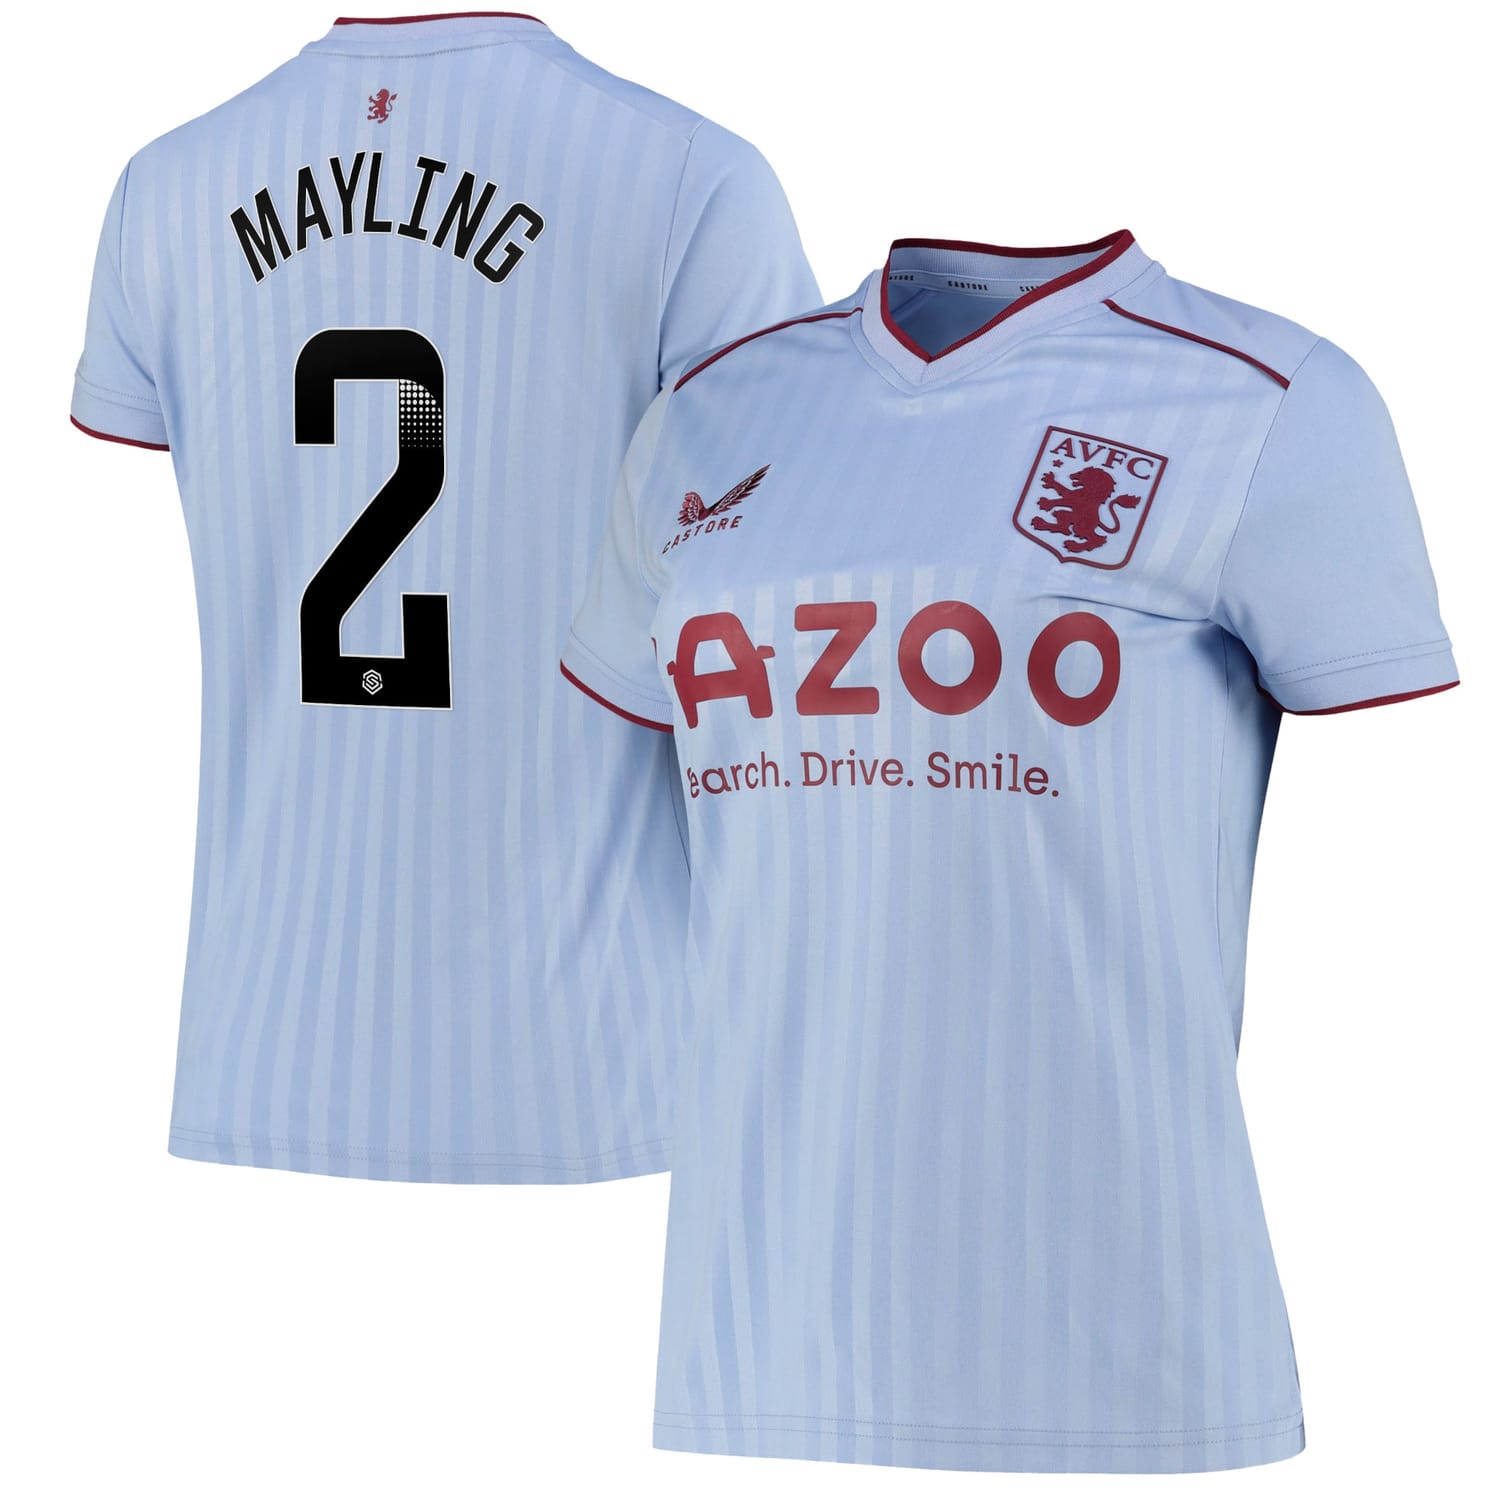 Premier League Aston Villa Away WSL Jersey Shirt 2022-23 player Sarah Mayling 2 printing for Women